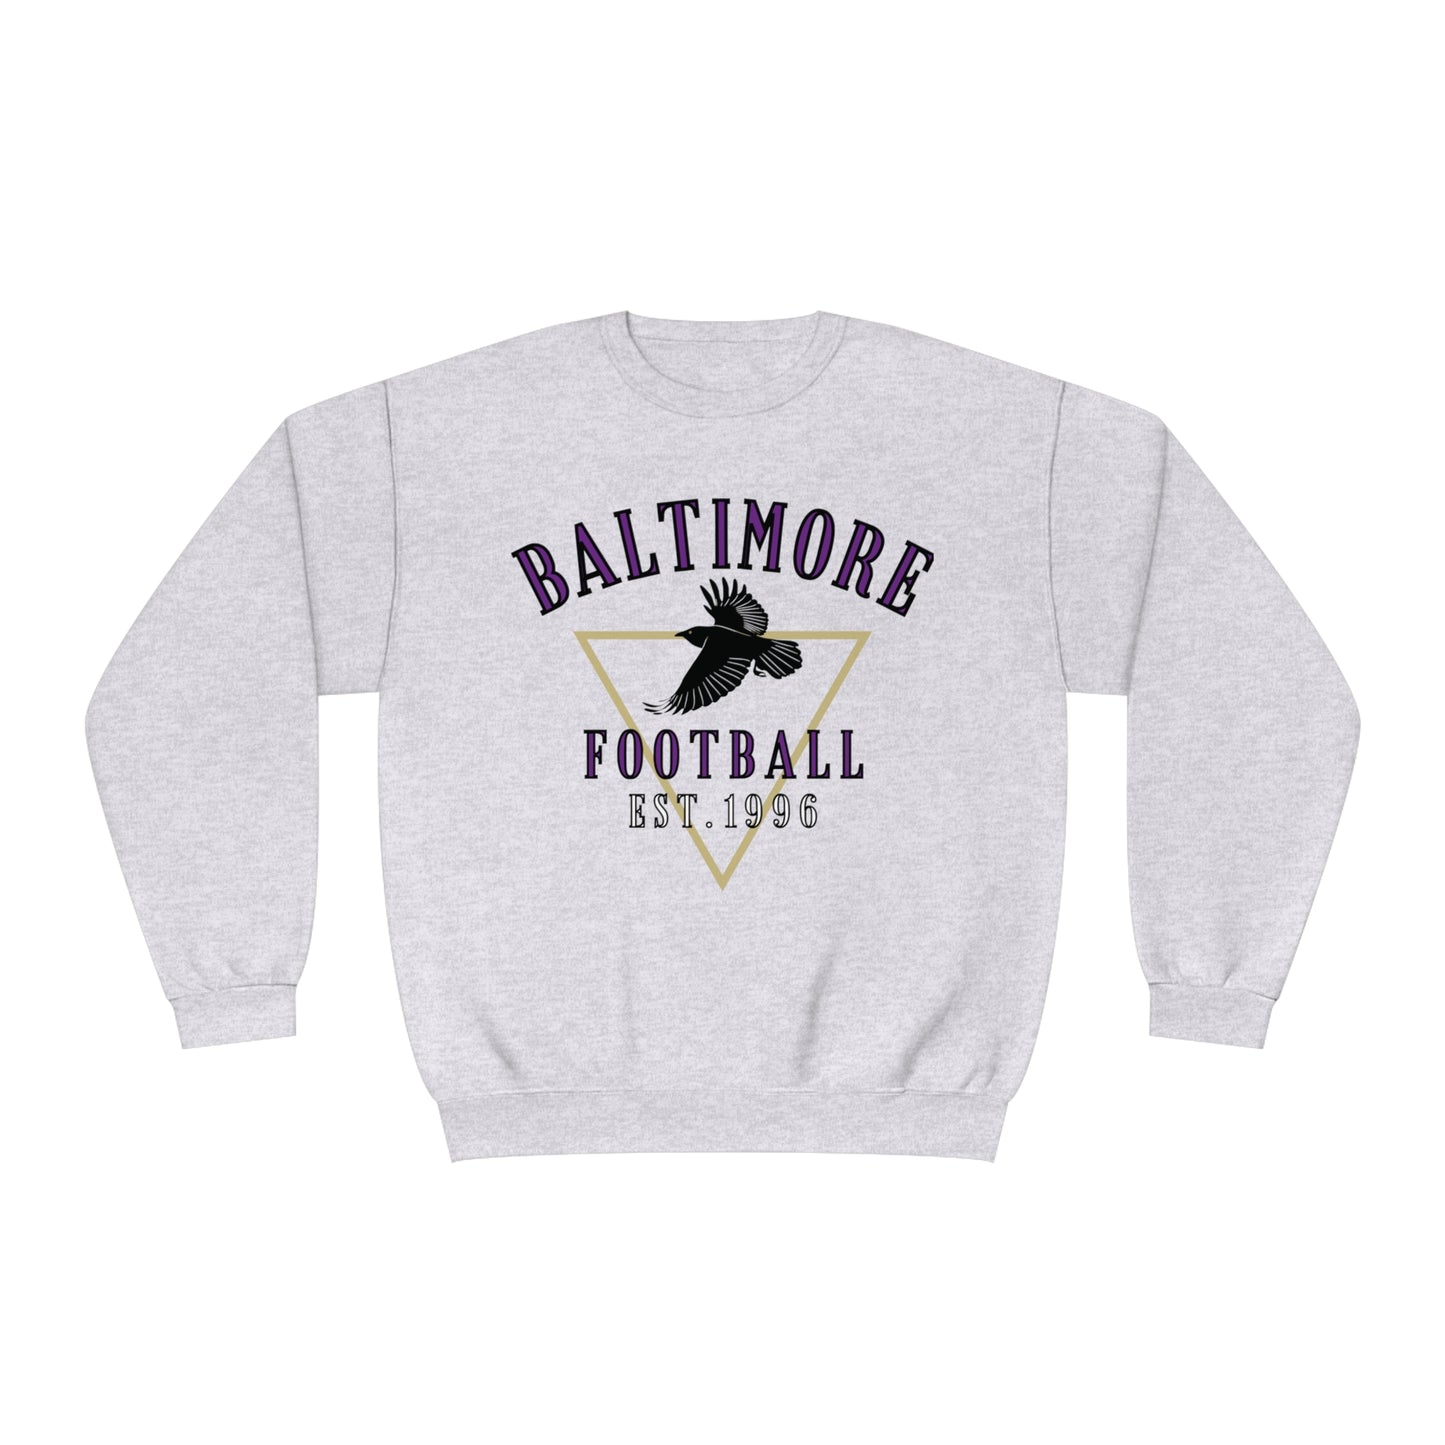 Vintage Baltimore Ravens Crewneck Sweatshirt  - NFL Football Hoodie - Retro Sweatshirt Oversized Game Day Apparel - Design 3